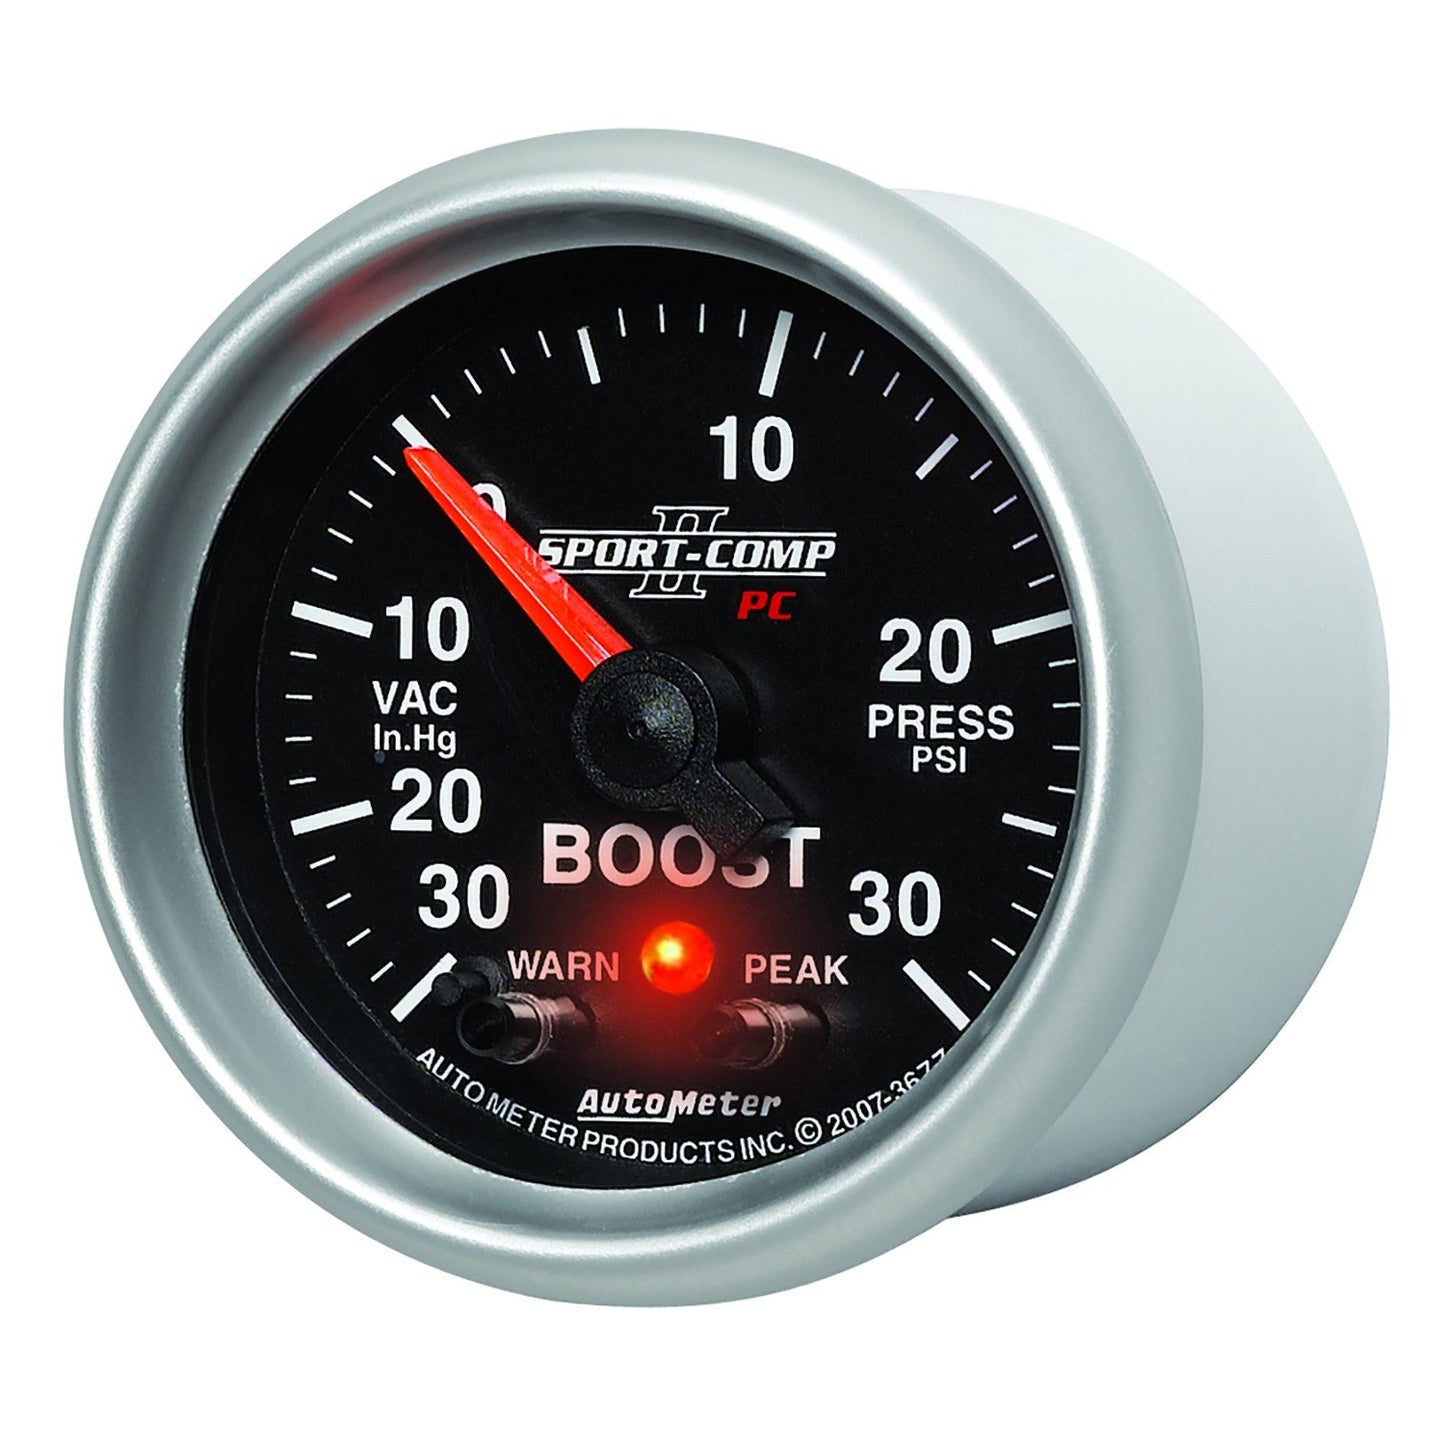 AutoMeter - 2-1/16" BOOST/VACUUM, W/ PEAK & WARN, 30 IN HG/30 PSI, STEPPER MOTOR, SPORT-COMP II (3677)